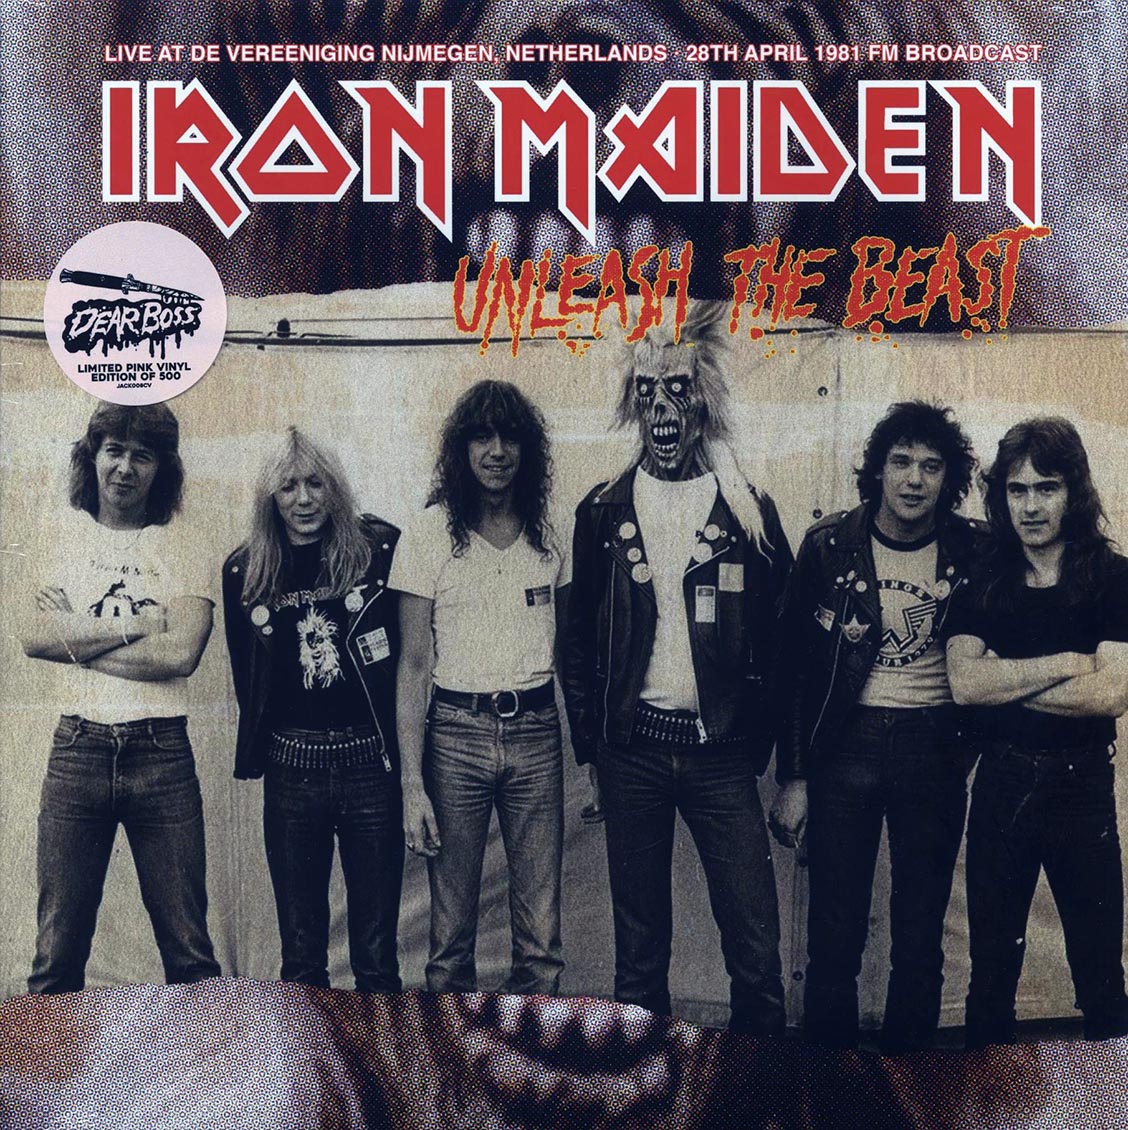 Iron Maiden - Unleash The Beast: Live At De Vereeniging Nijmegen, Netherlands 28th April 1981 FM Broadcast